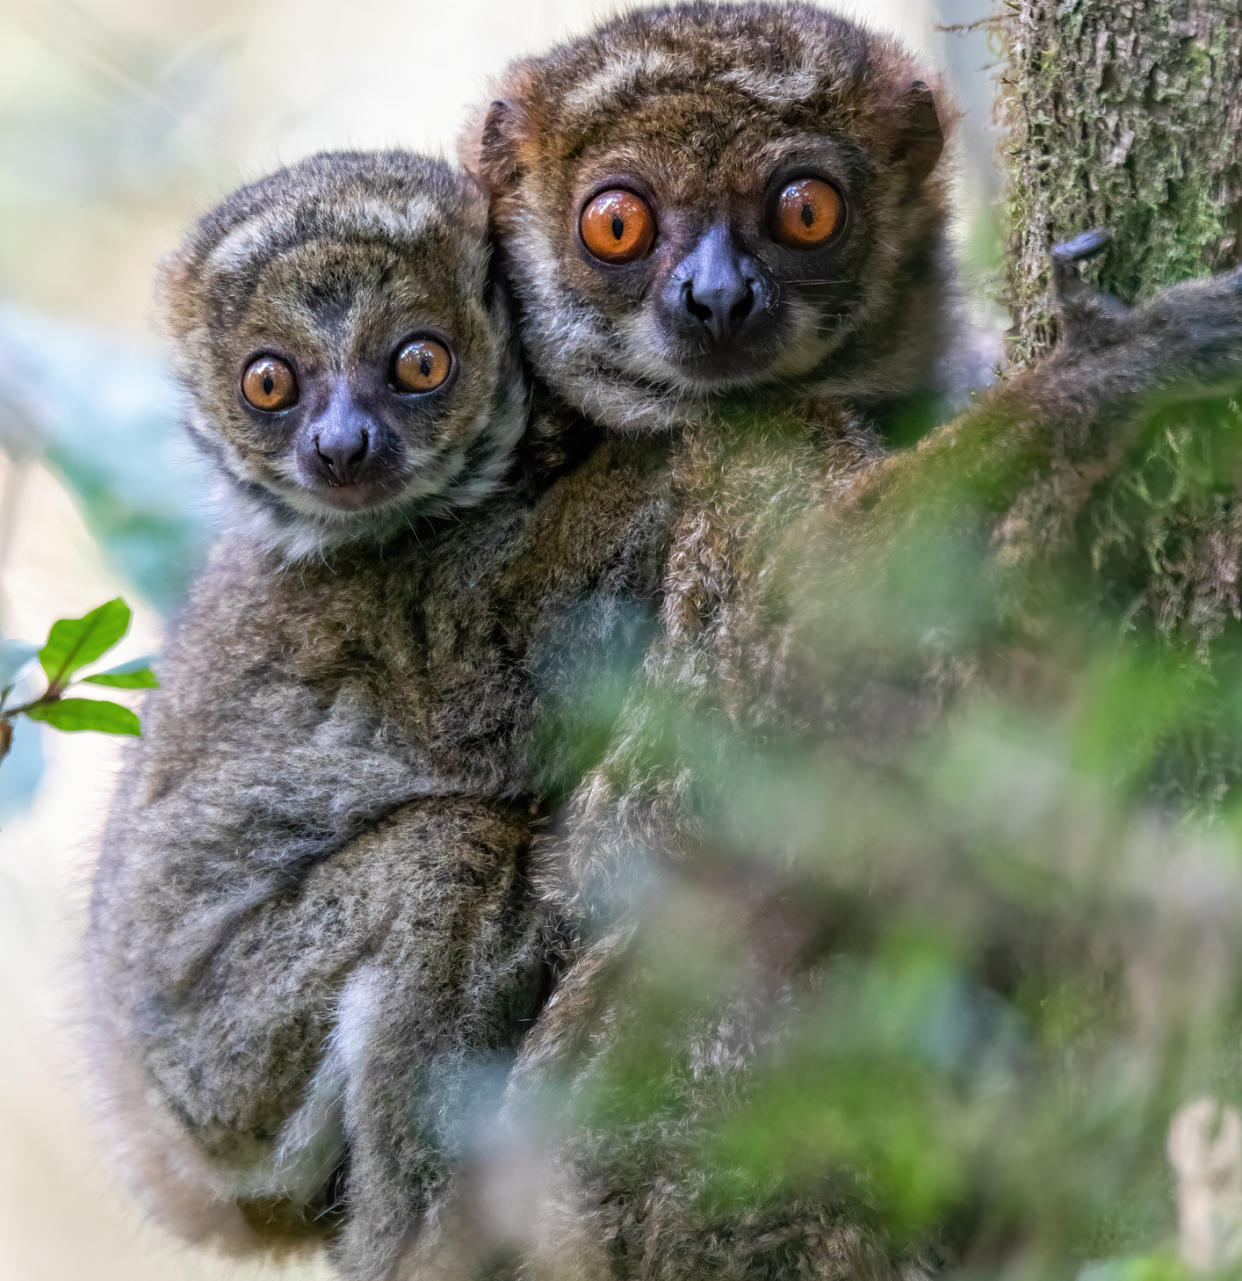 https://www.gettyimages.co.uk/detail/photo/avahi-peyrieras-woolly-lemur-avahi-peyrierasi-royalty-free-image/1454340030?phrase=baby+animals+in+the+wild&adppopup=true